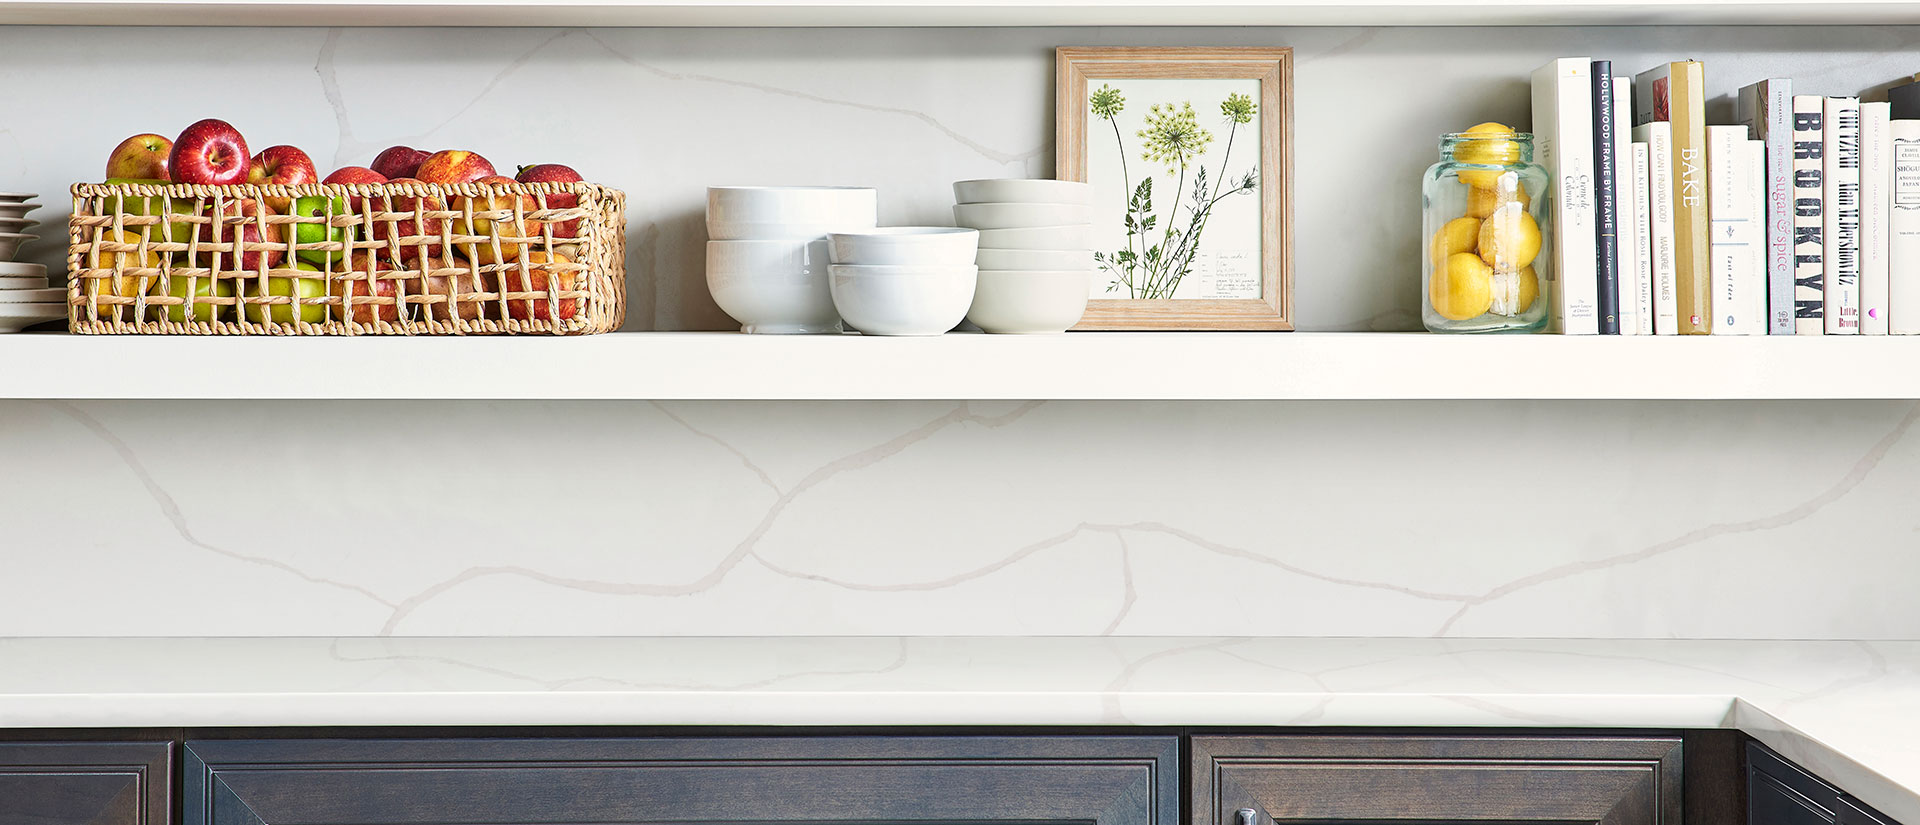 Calacatta Classique quartz countertop in a luxurious kitchen with golden accents